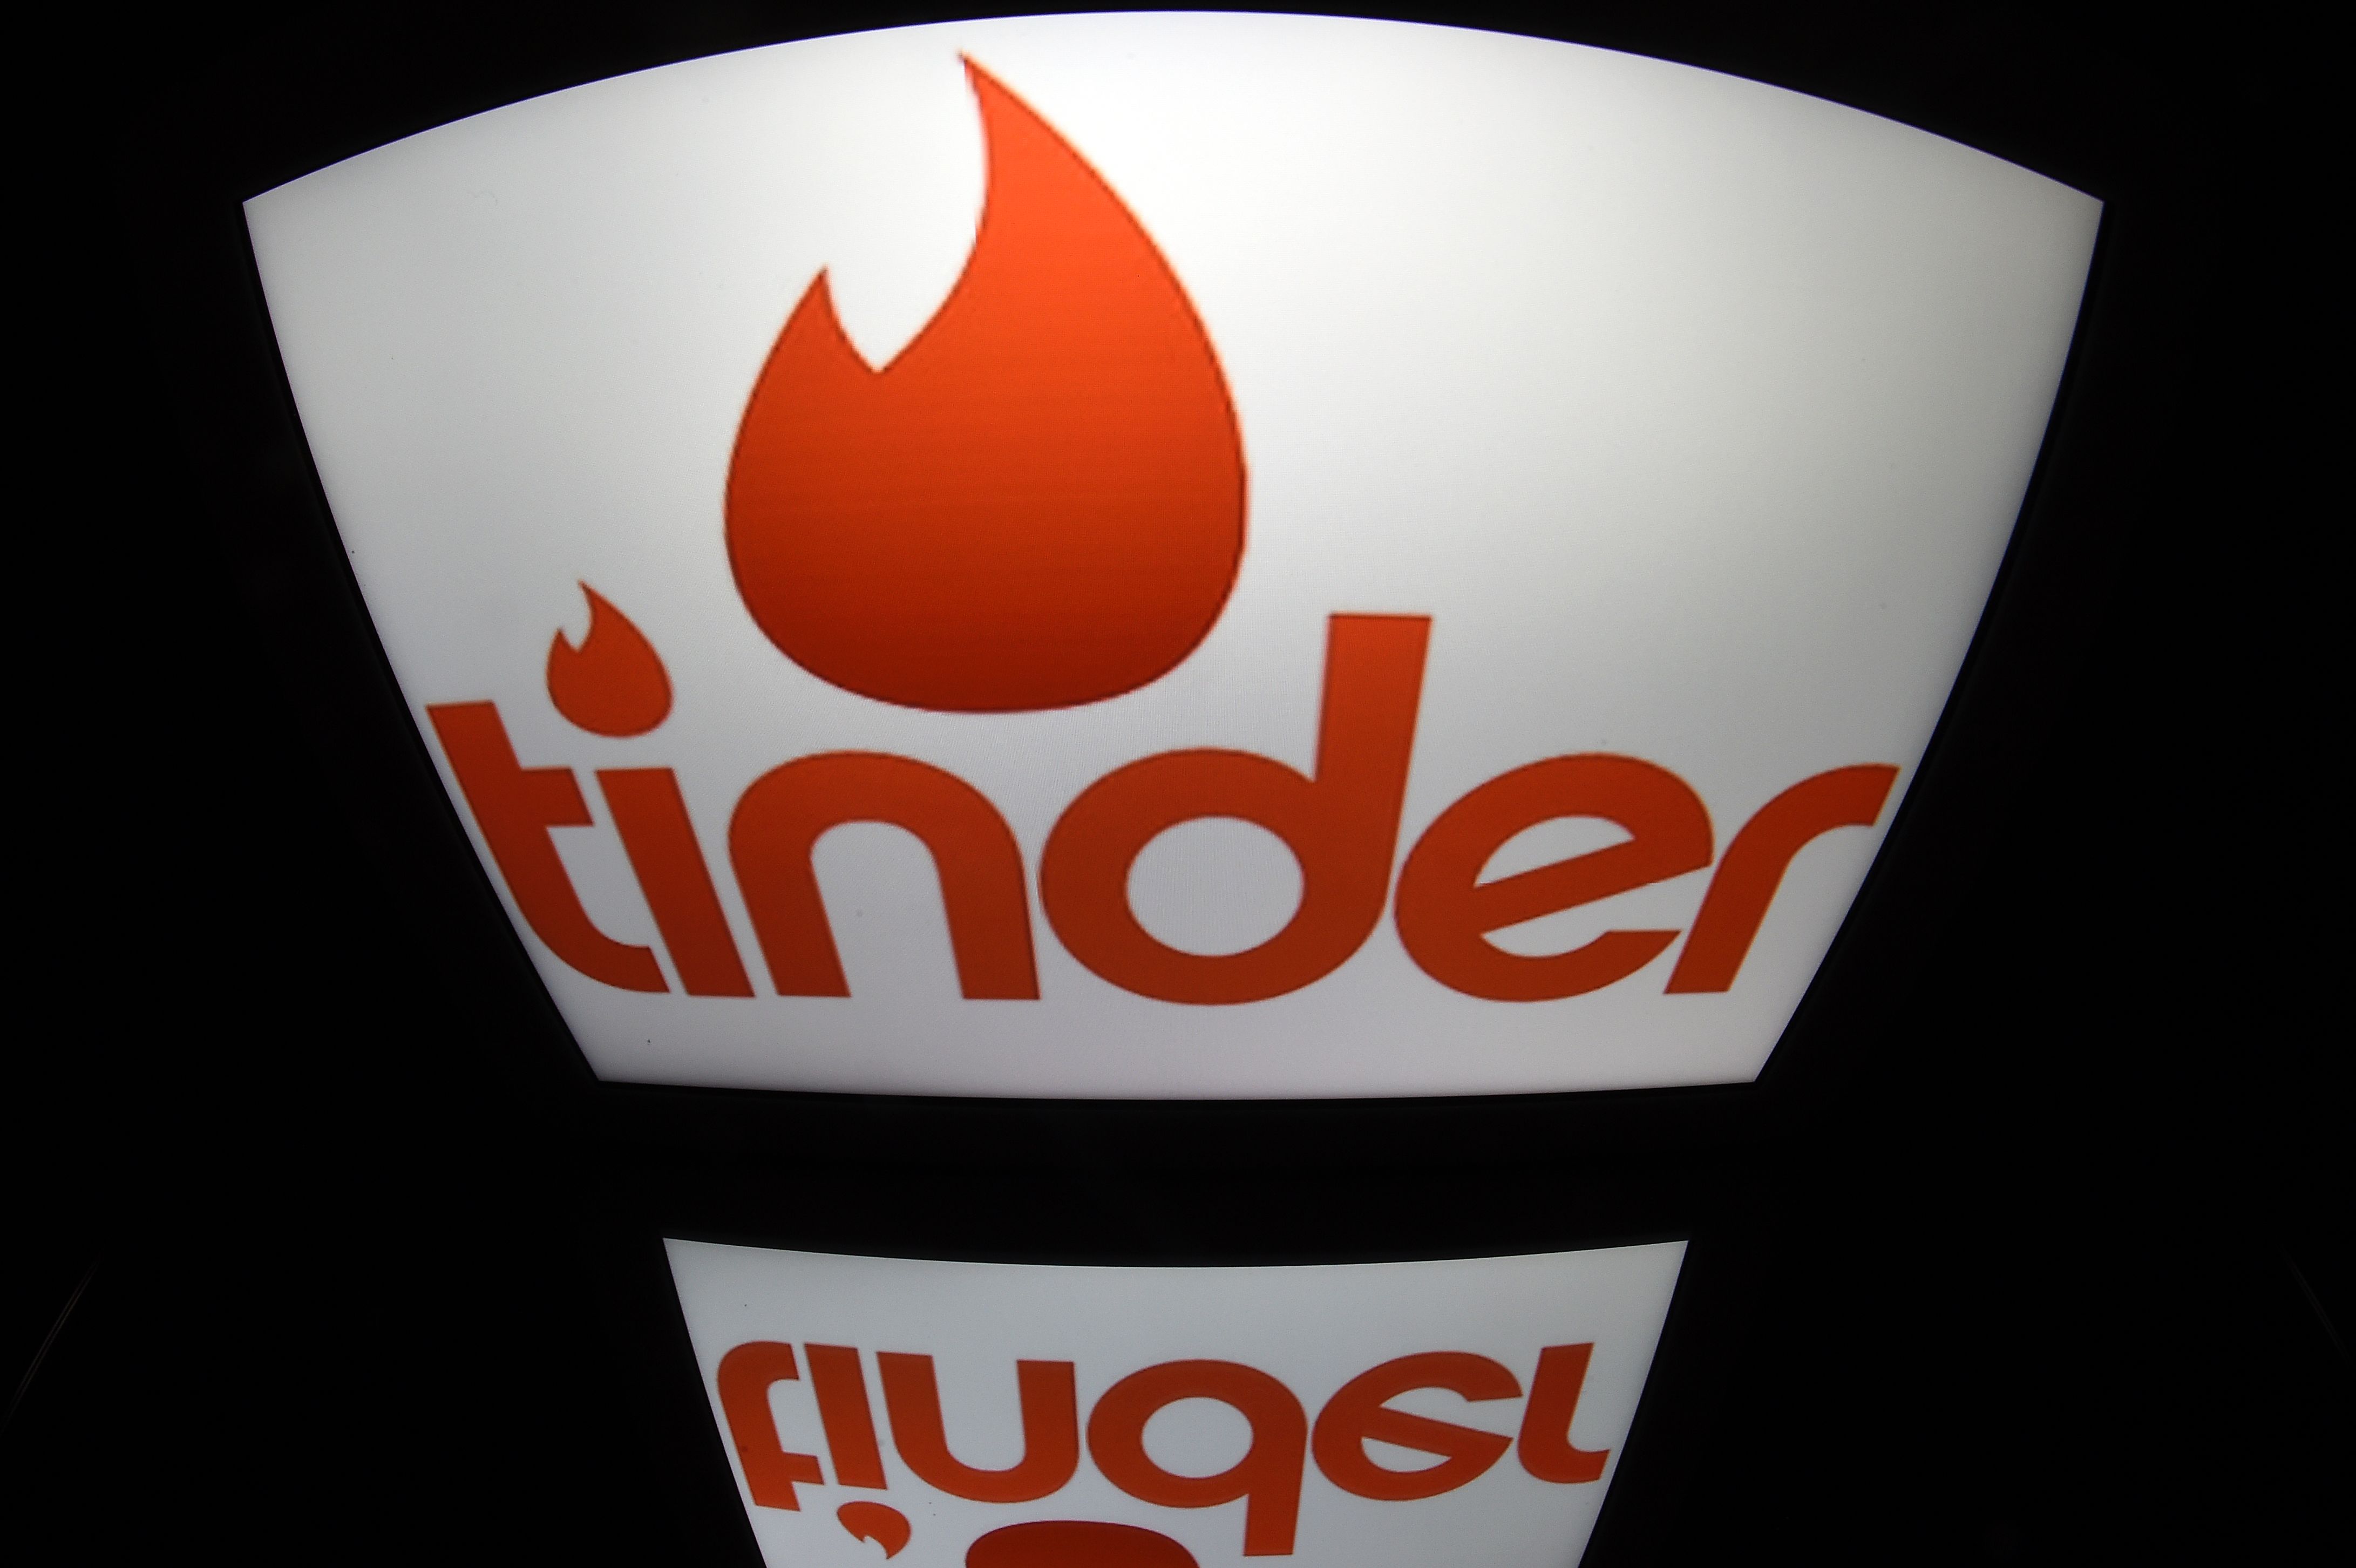 tinder dating apps